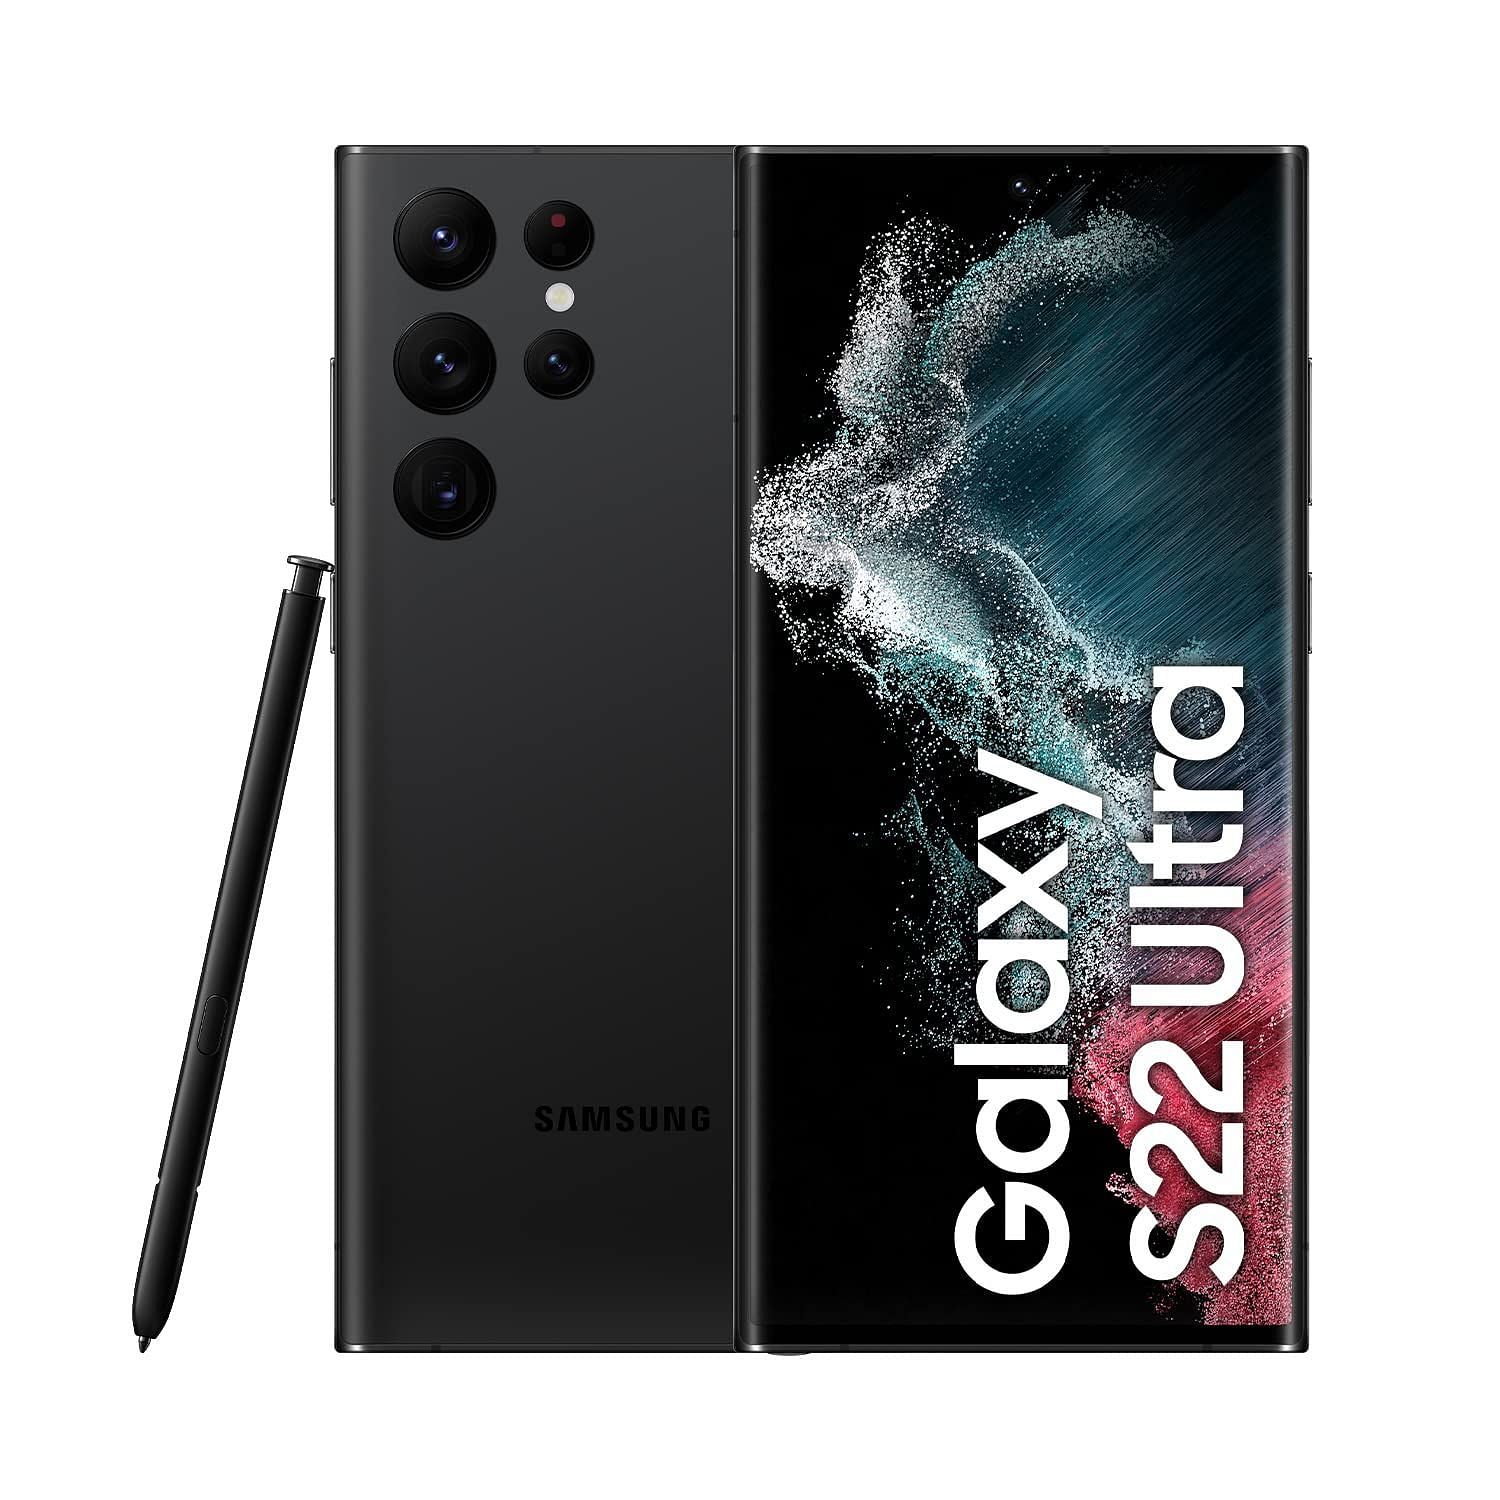 The Samsung Galaxy S22 Ultra (Image via Amazon)